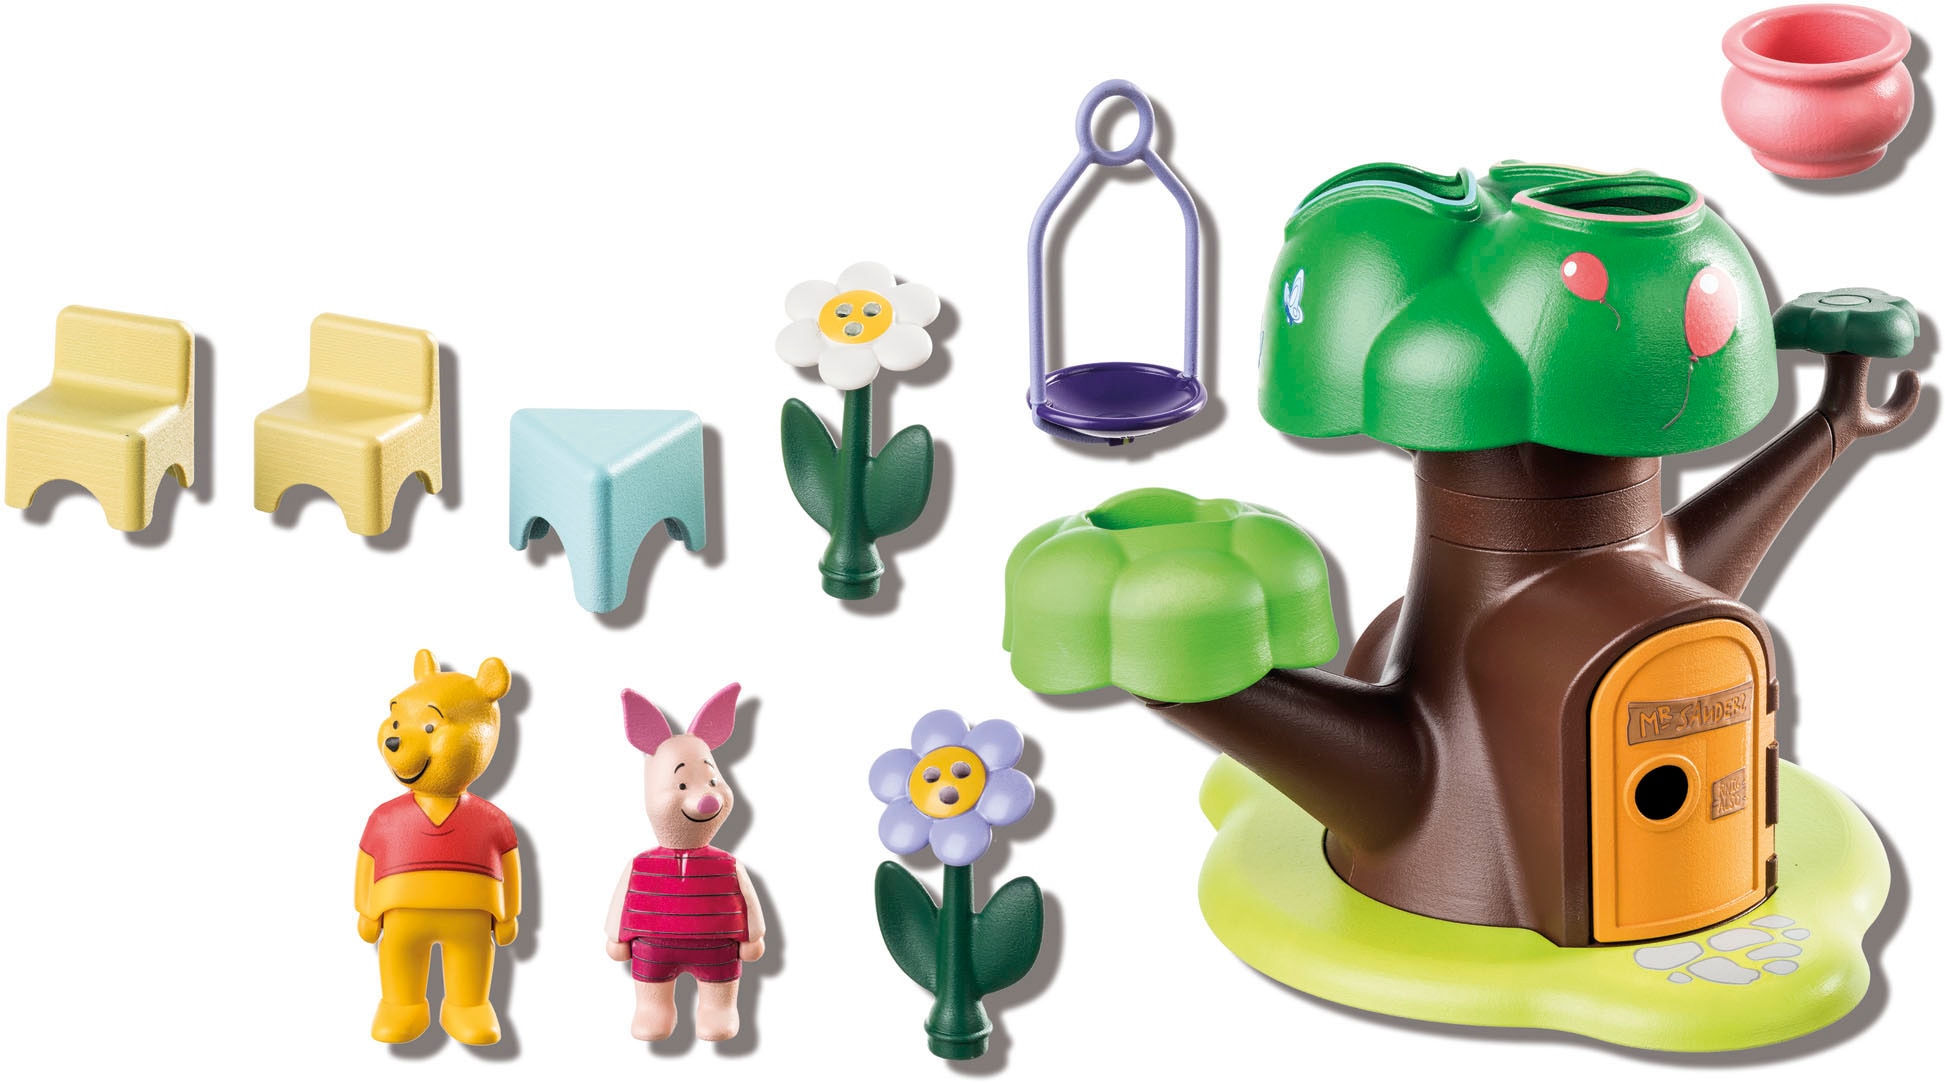 Playmobil® Konstruktions-Spielset »Winnies & Ferkels Baumhaus (71316), Playmobil 1-2-3«, (17 St.), Made in Europe